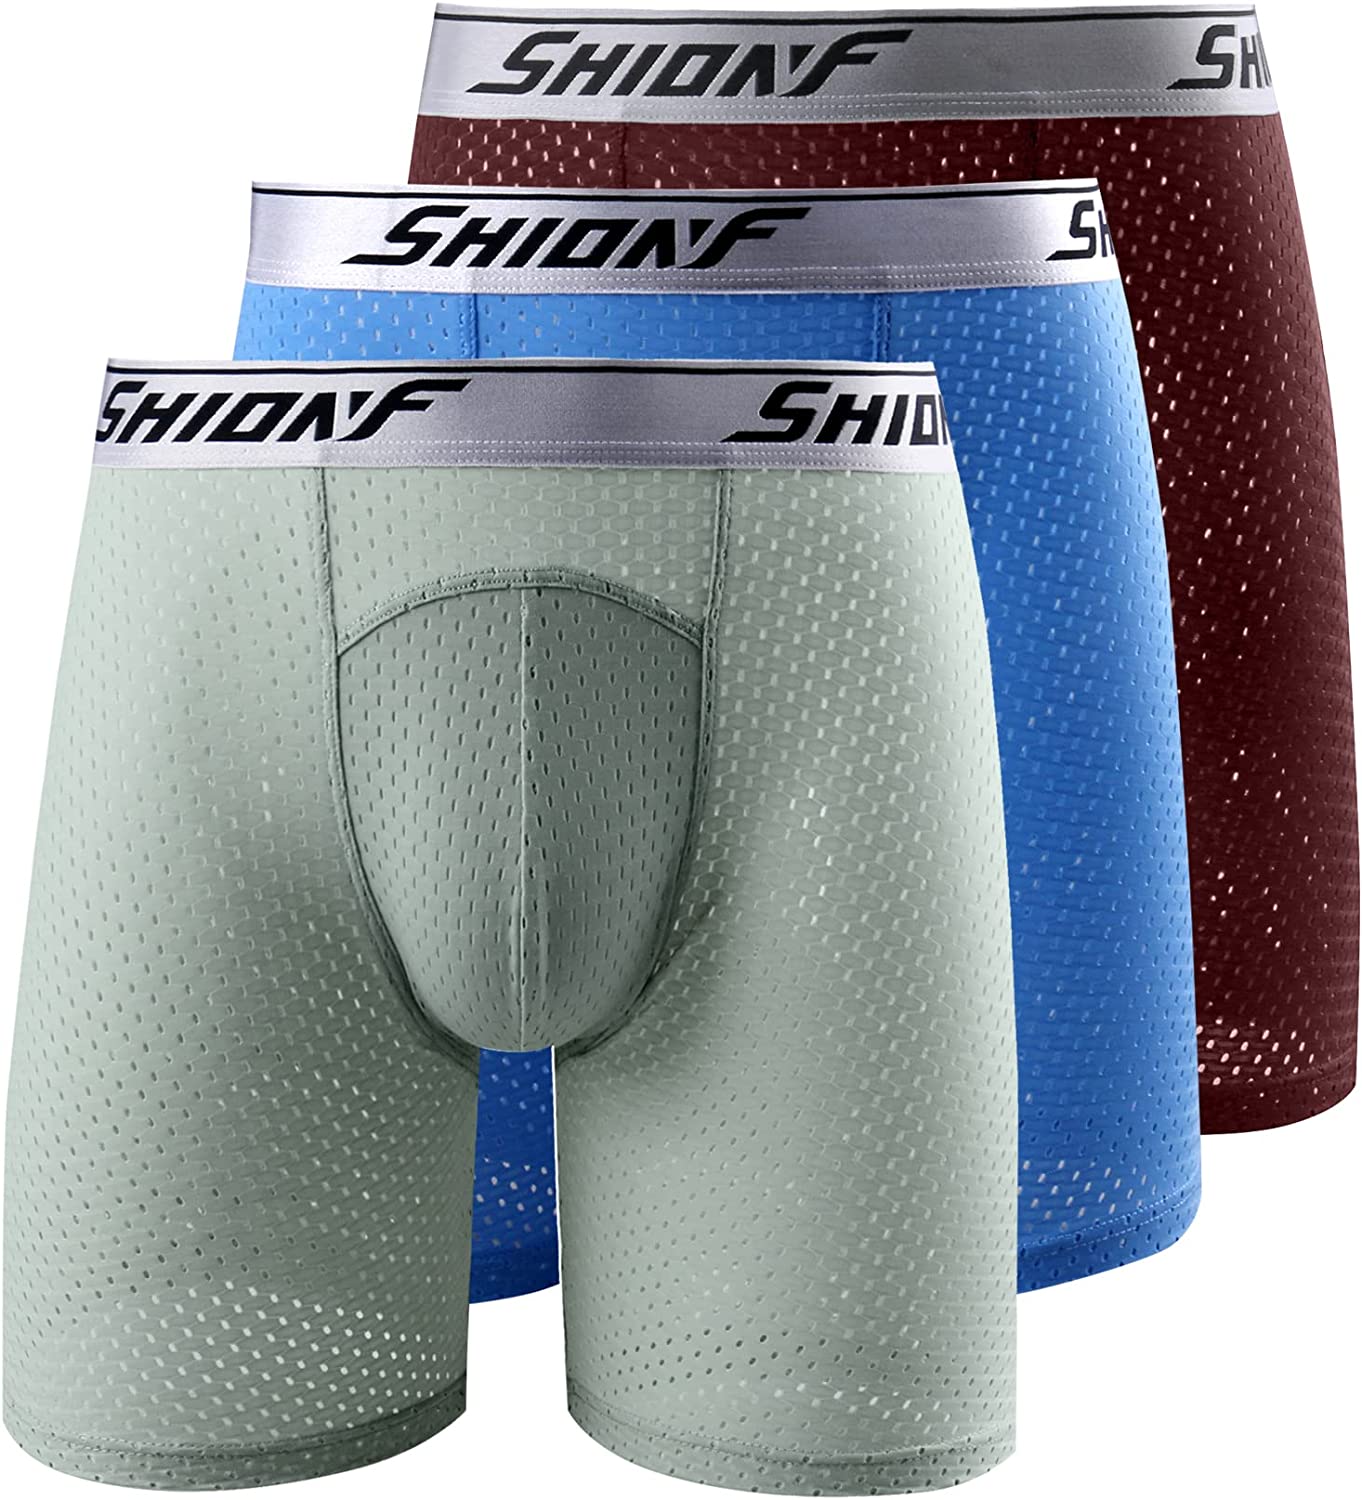  SHIONF Sauna underwear for men's Sweat Pants High